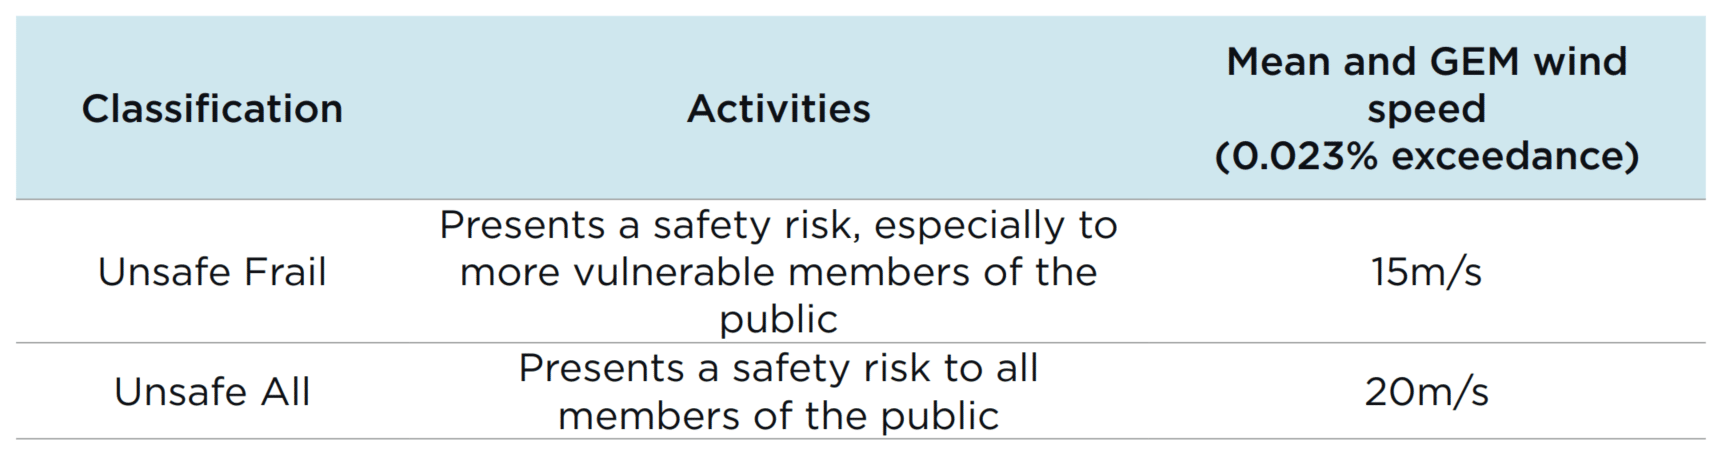 Lawsons Criteria (2001) - Safety